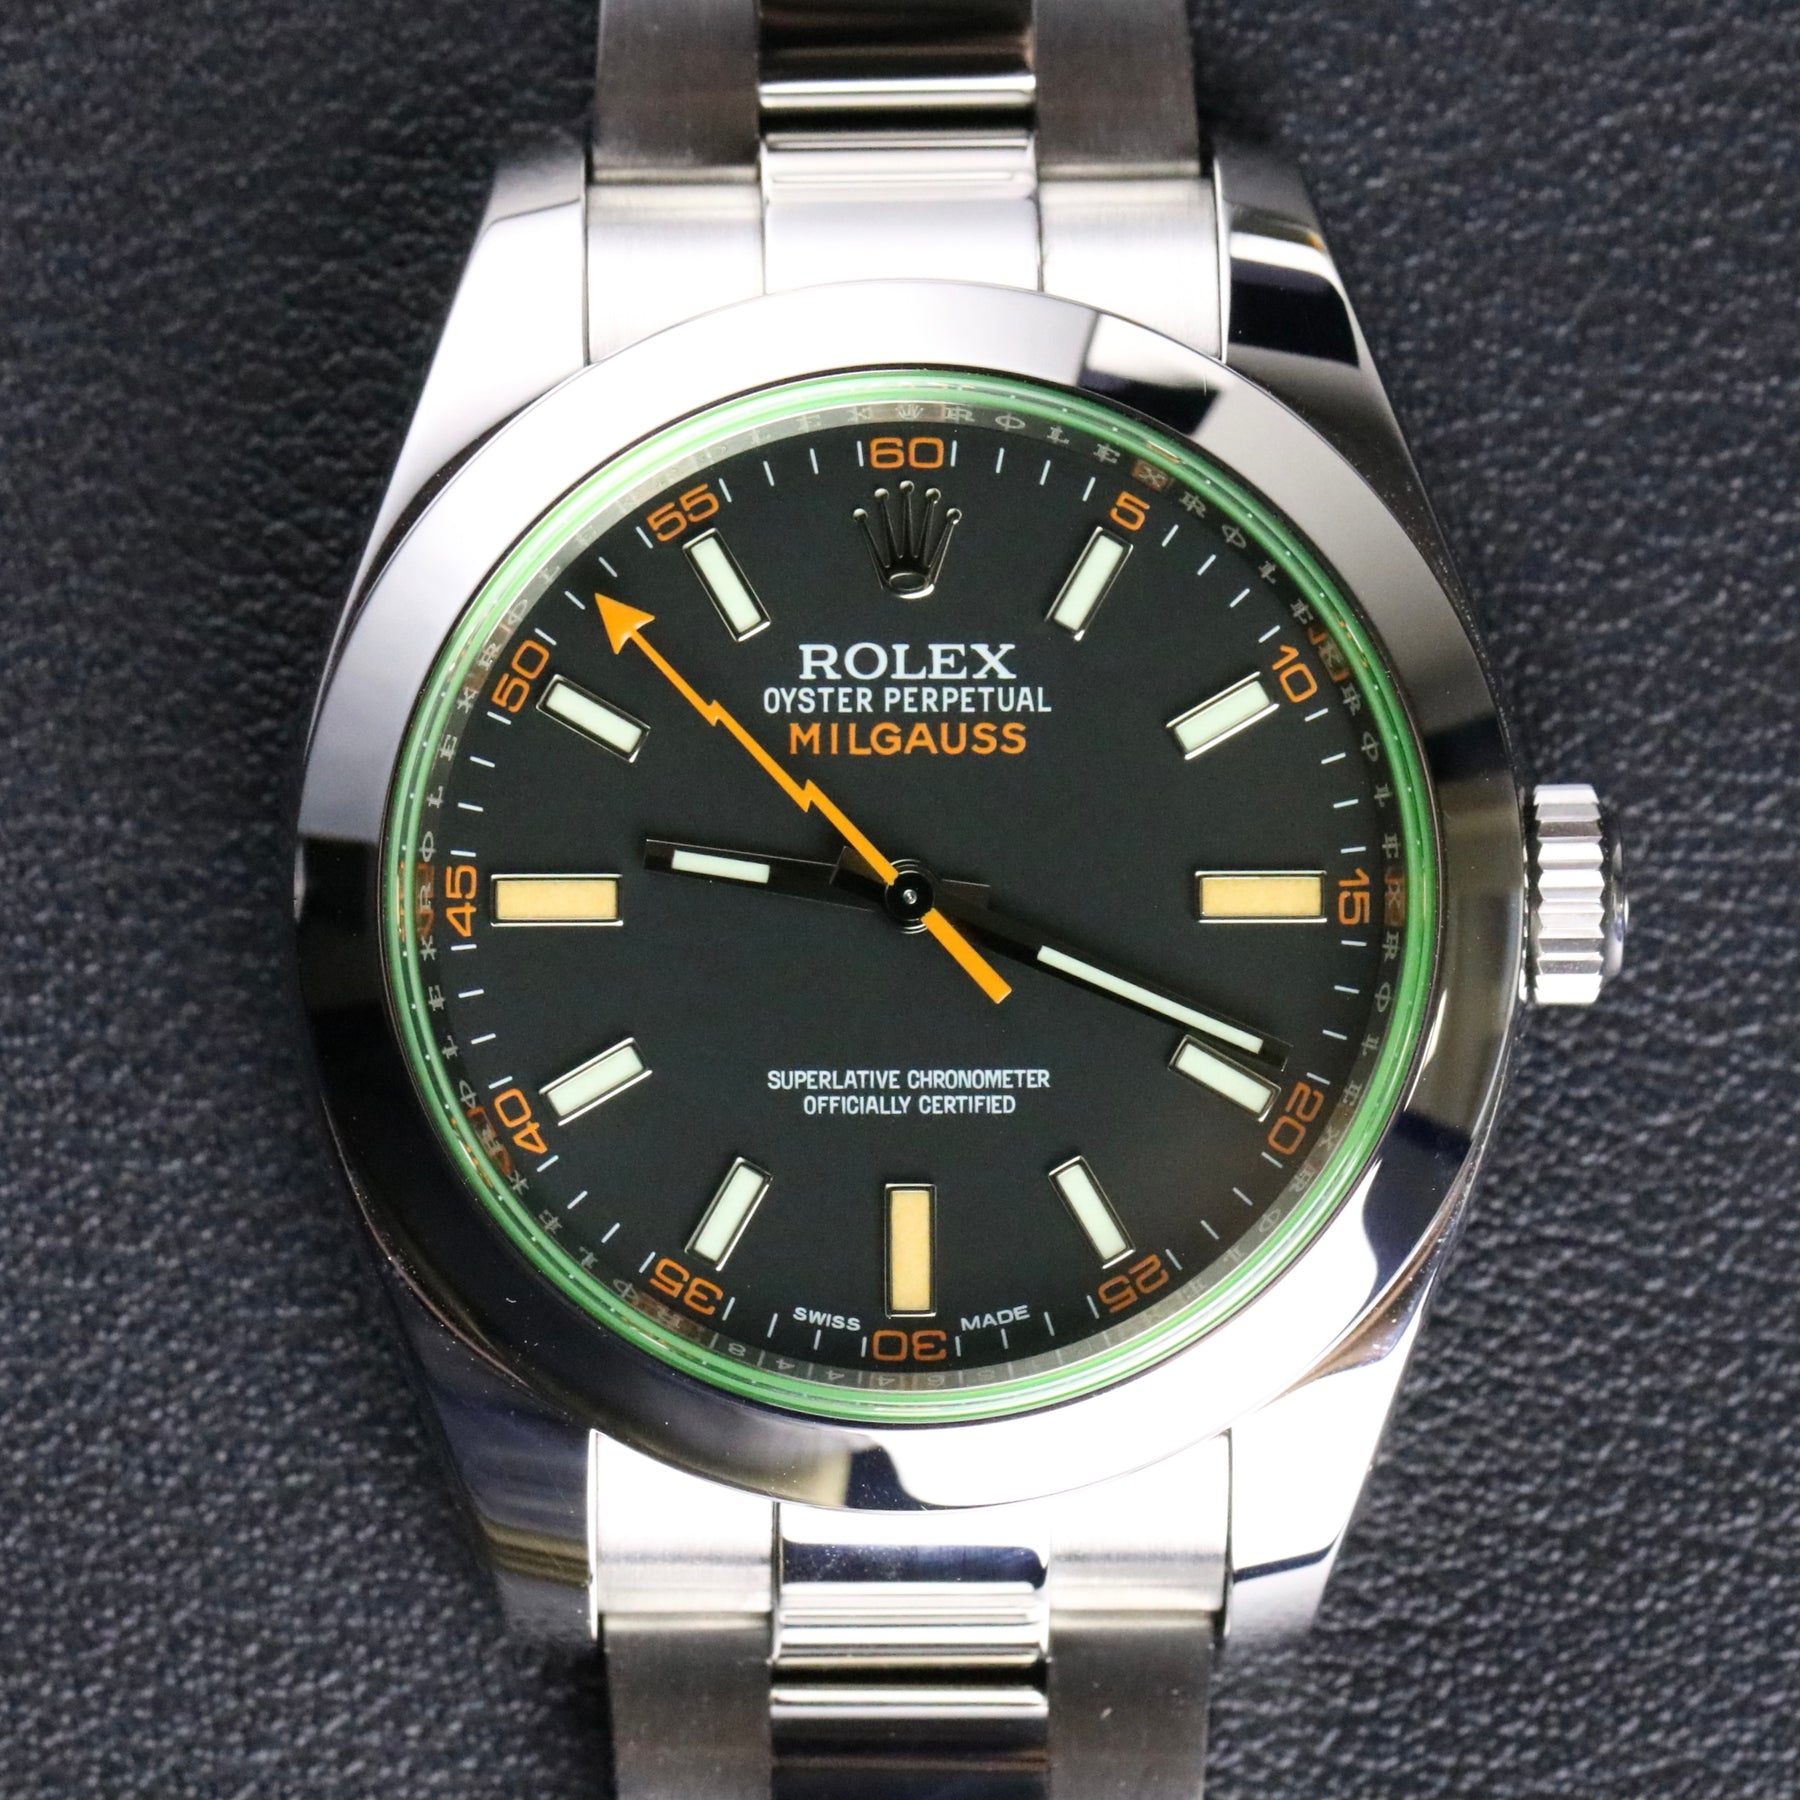 2014 Rolex 116400GV Milgauss Green Sapphire